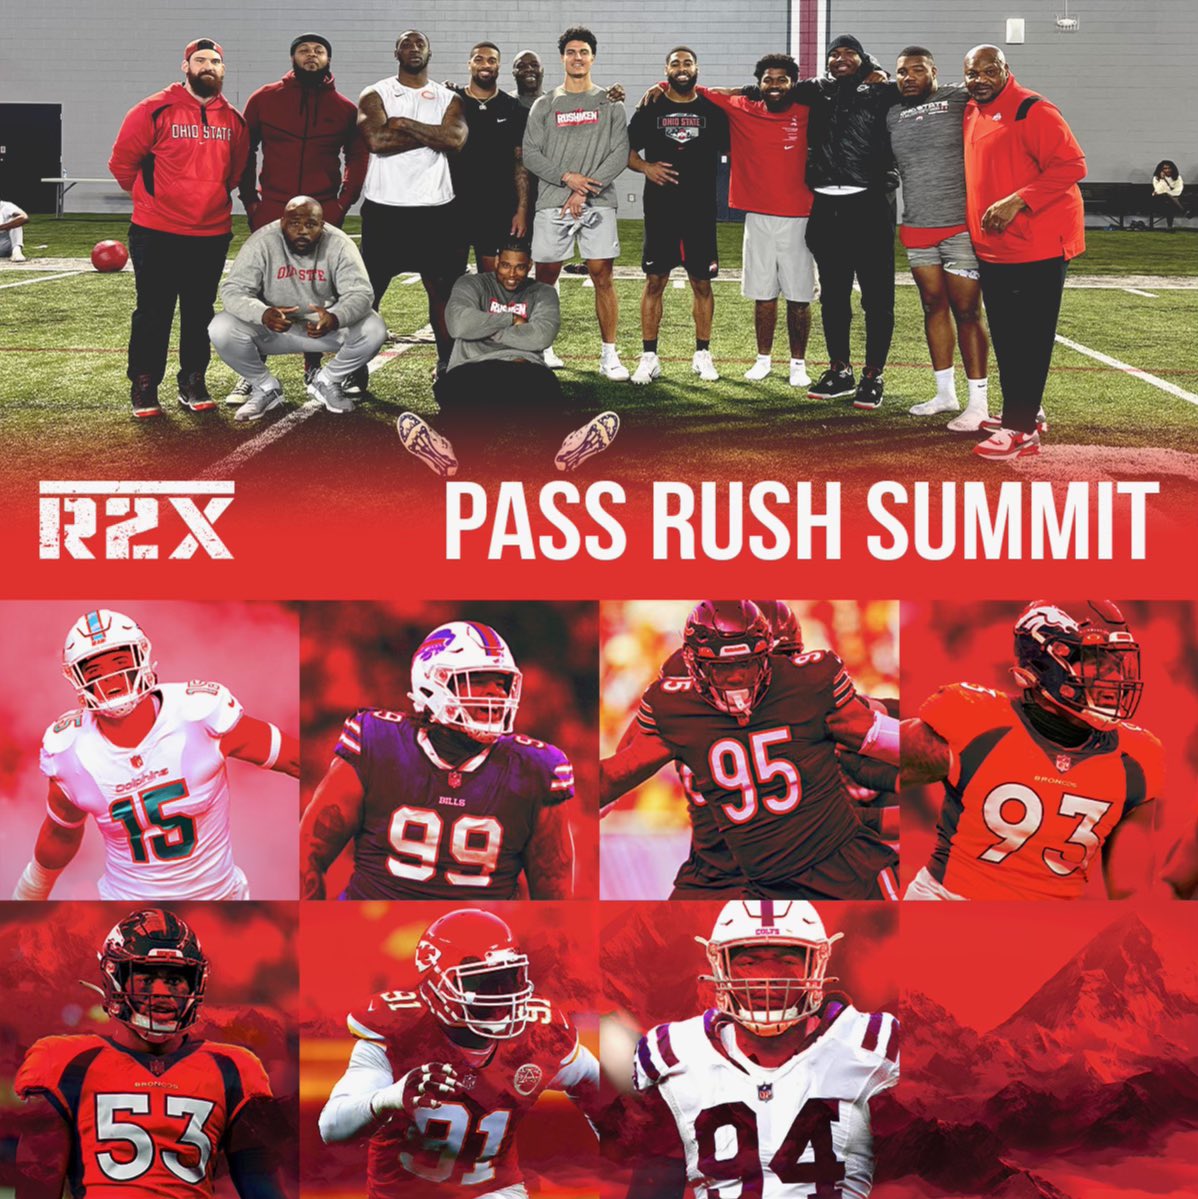 Thanks For Joining Us At The Pass Rush Summit!! @CageJerron @PrimeTime_Lewis @t_lova23 @JonathonCooper7 @JJPhillips15 @TambaHali91 @TheOfficial_80 @JayHolmes_ @tim_settle @CoachLCTrenches #Rushmen @NFL @OhioStateFB